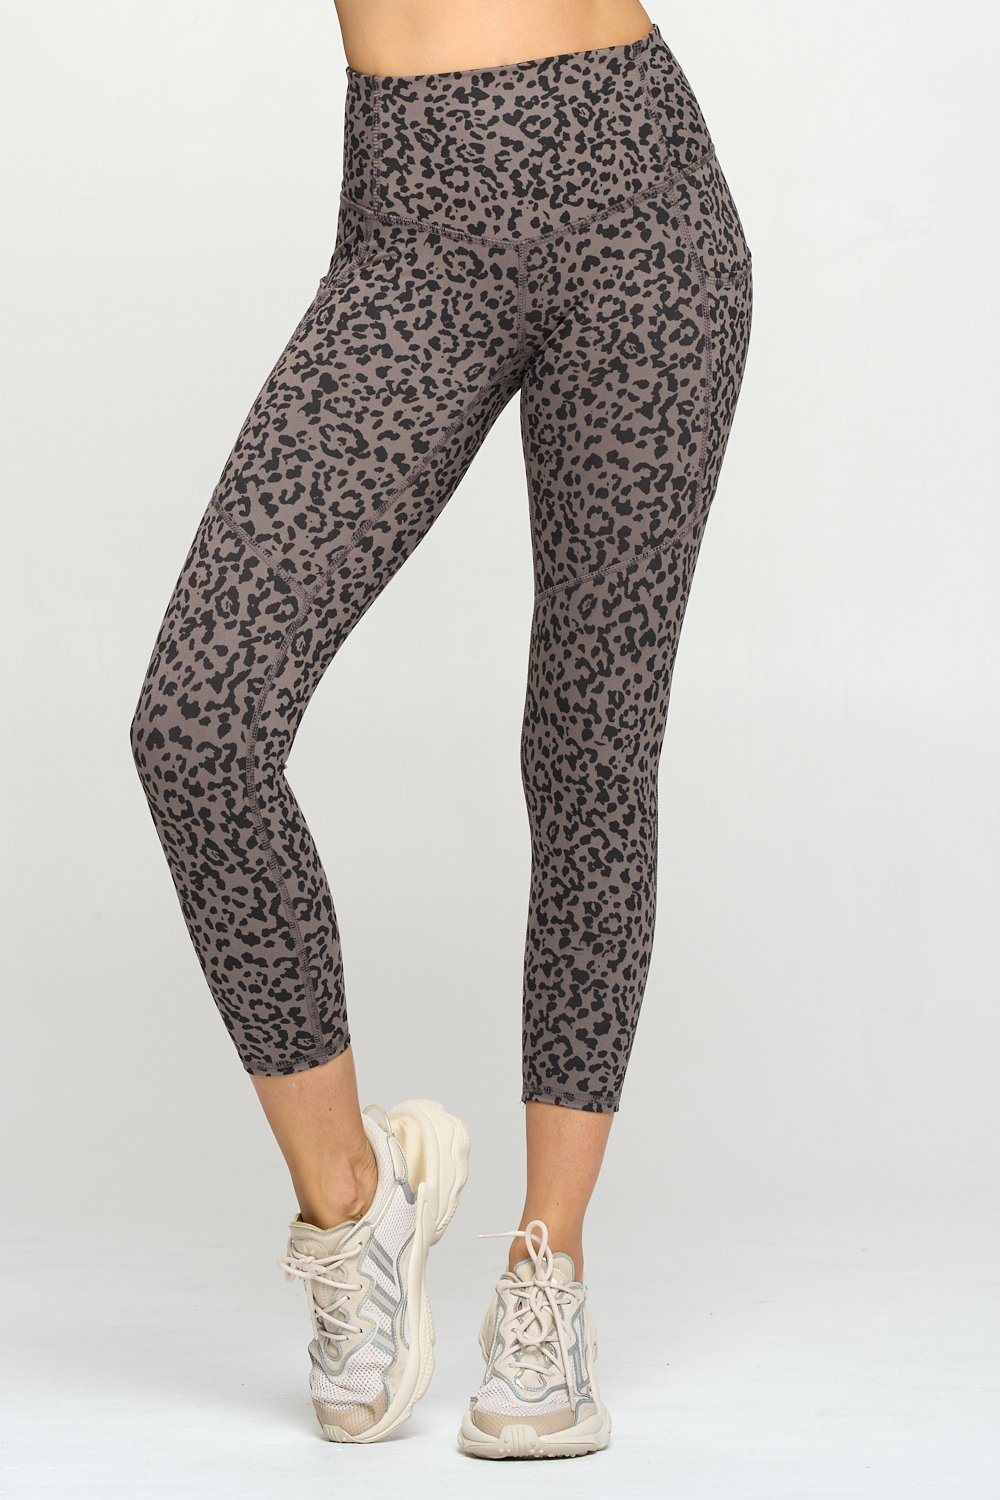 Liz - Brown Abstract Cheetah Pockets 7/8 Legging**FINAL SALE**